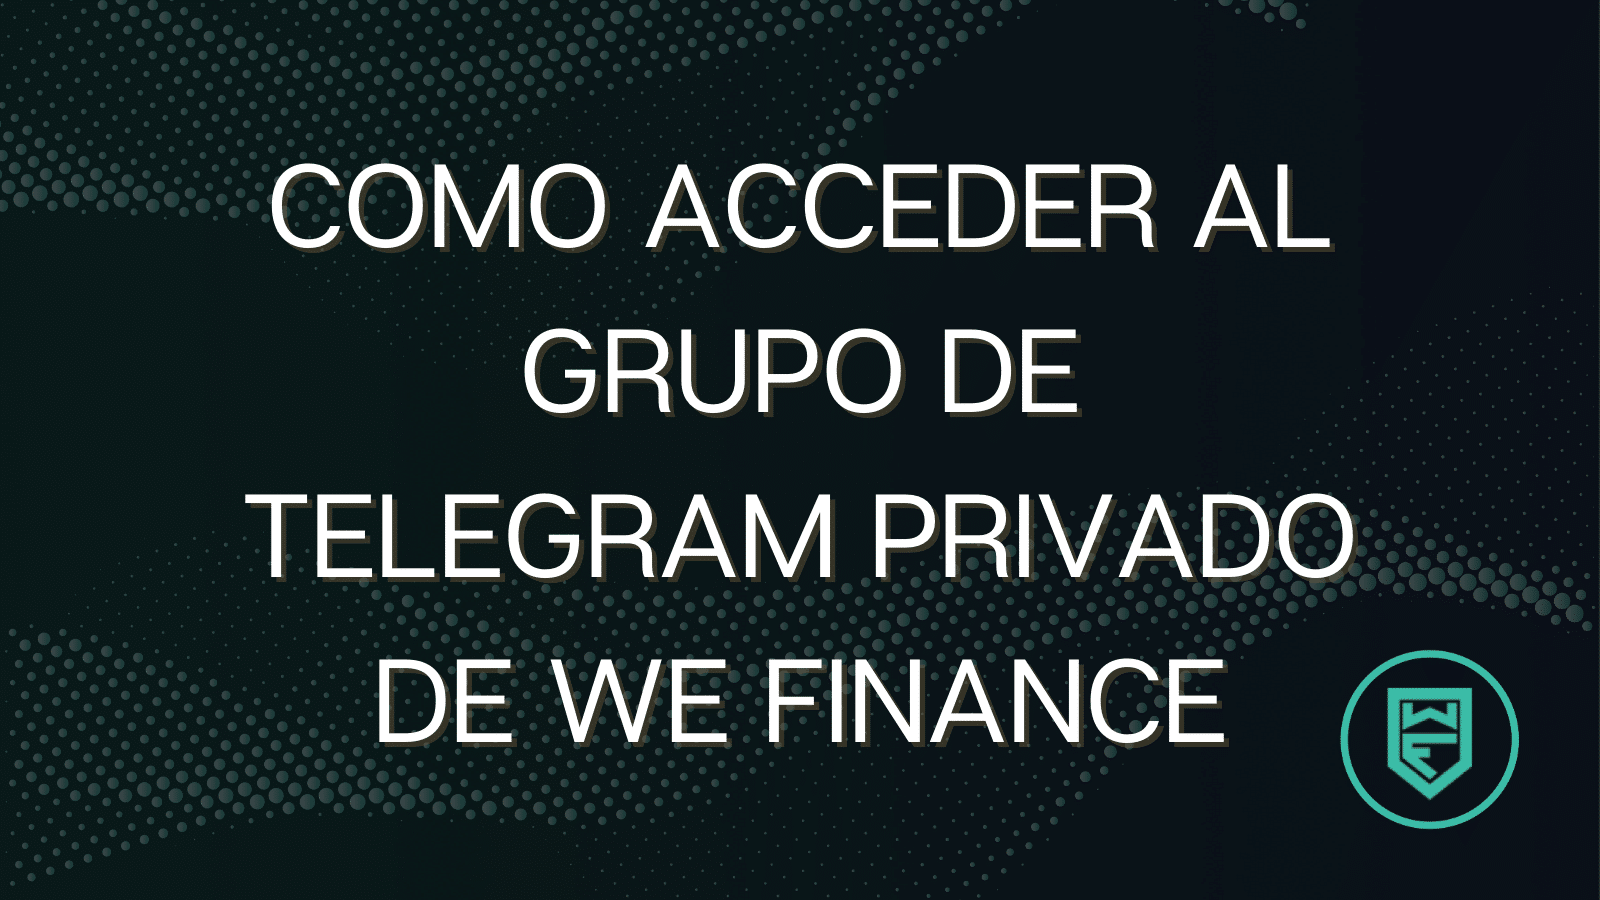 acceder-grupo-privado-wefinance